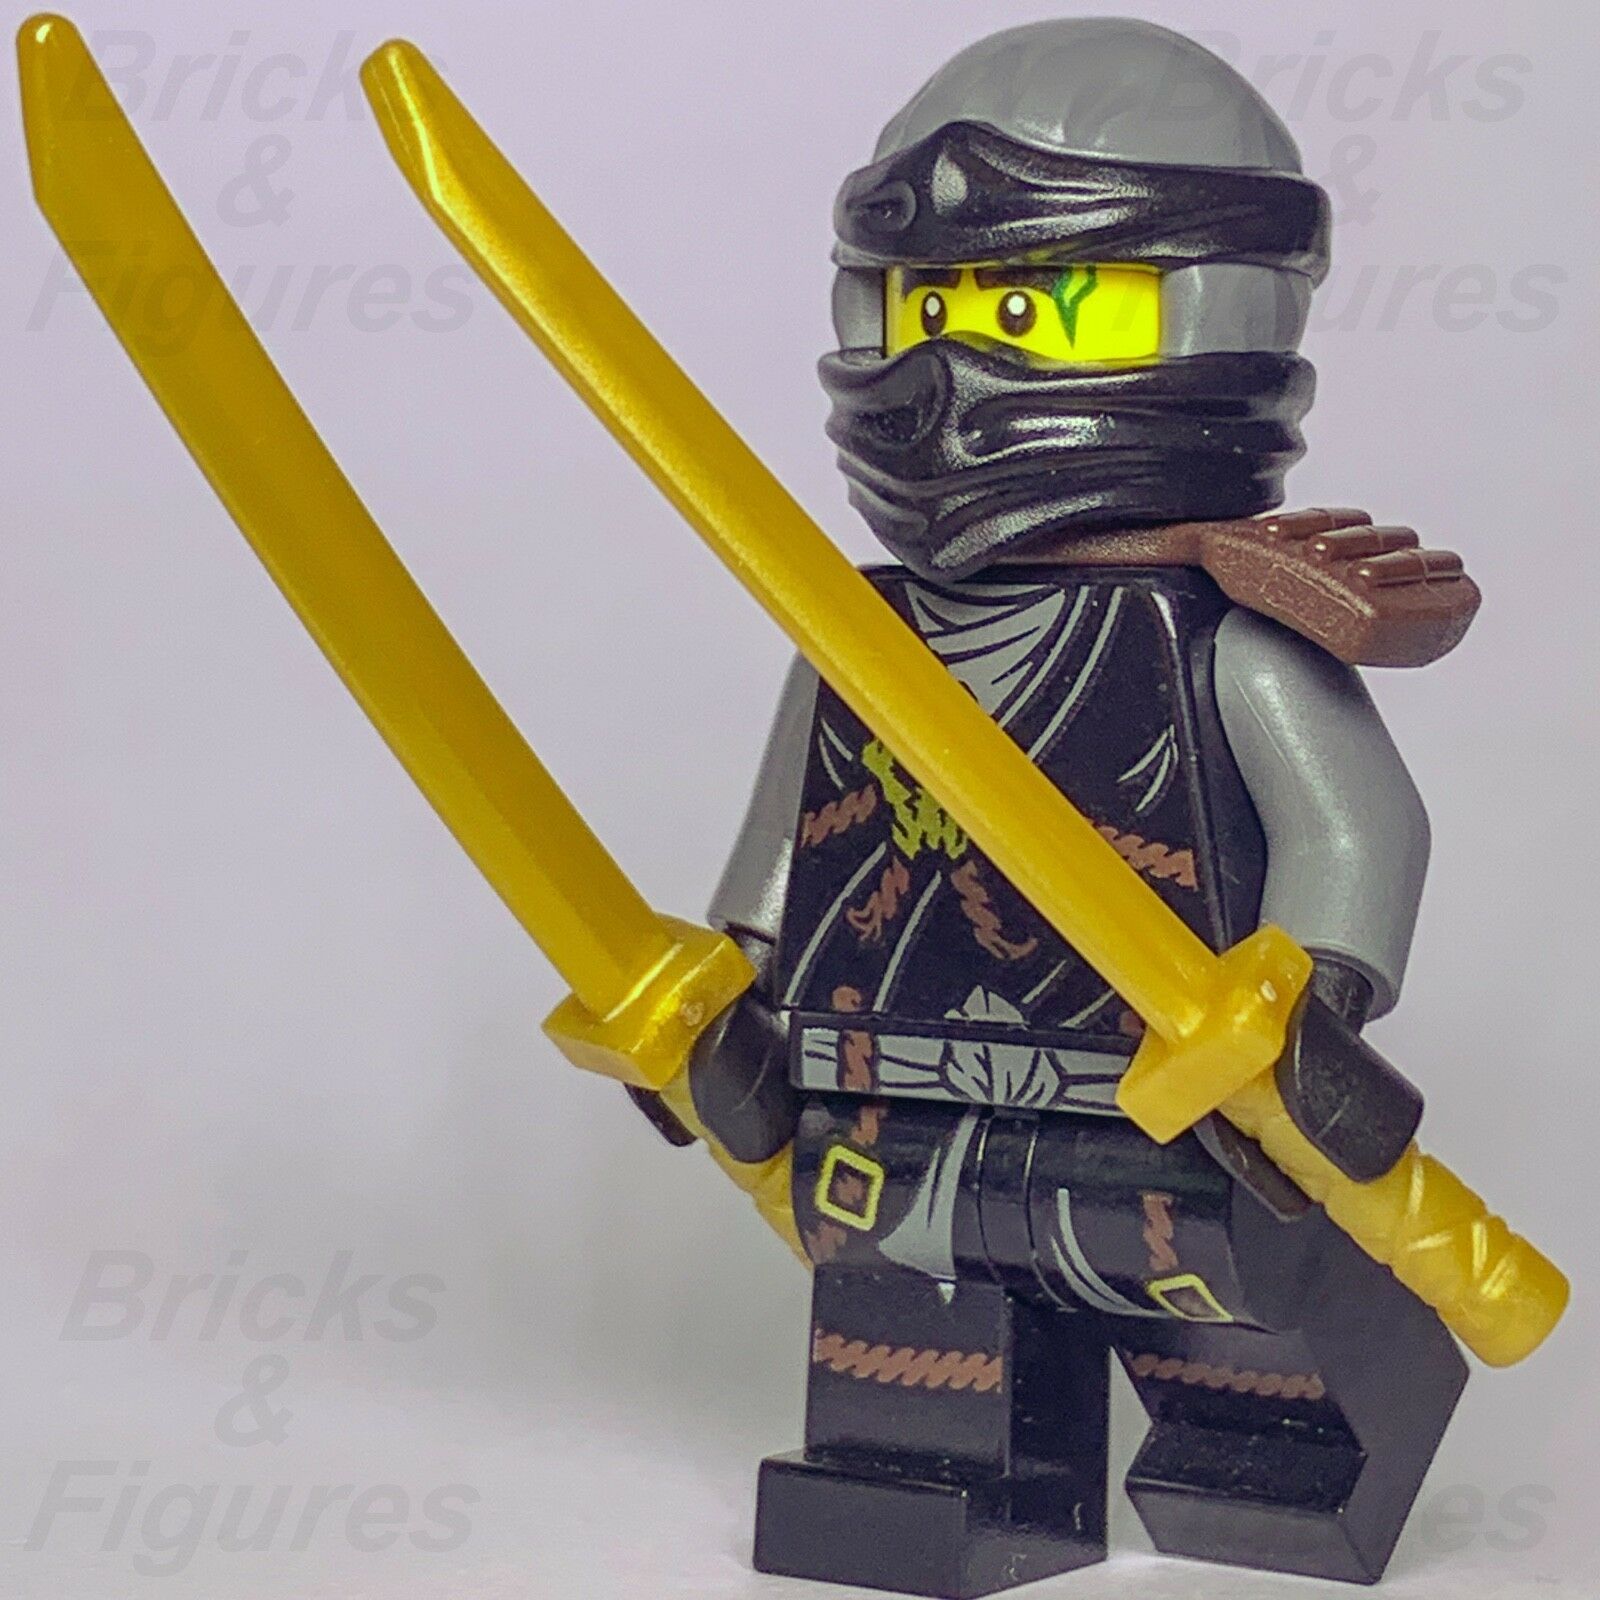 New Ninjago LEGO Cole Earth Ninja Day of the Departed Minifigure 70595 - Bricks & Figures